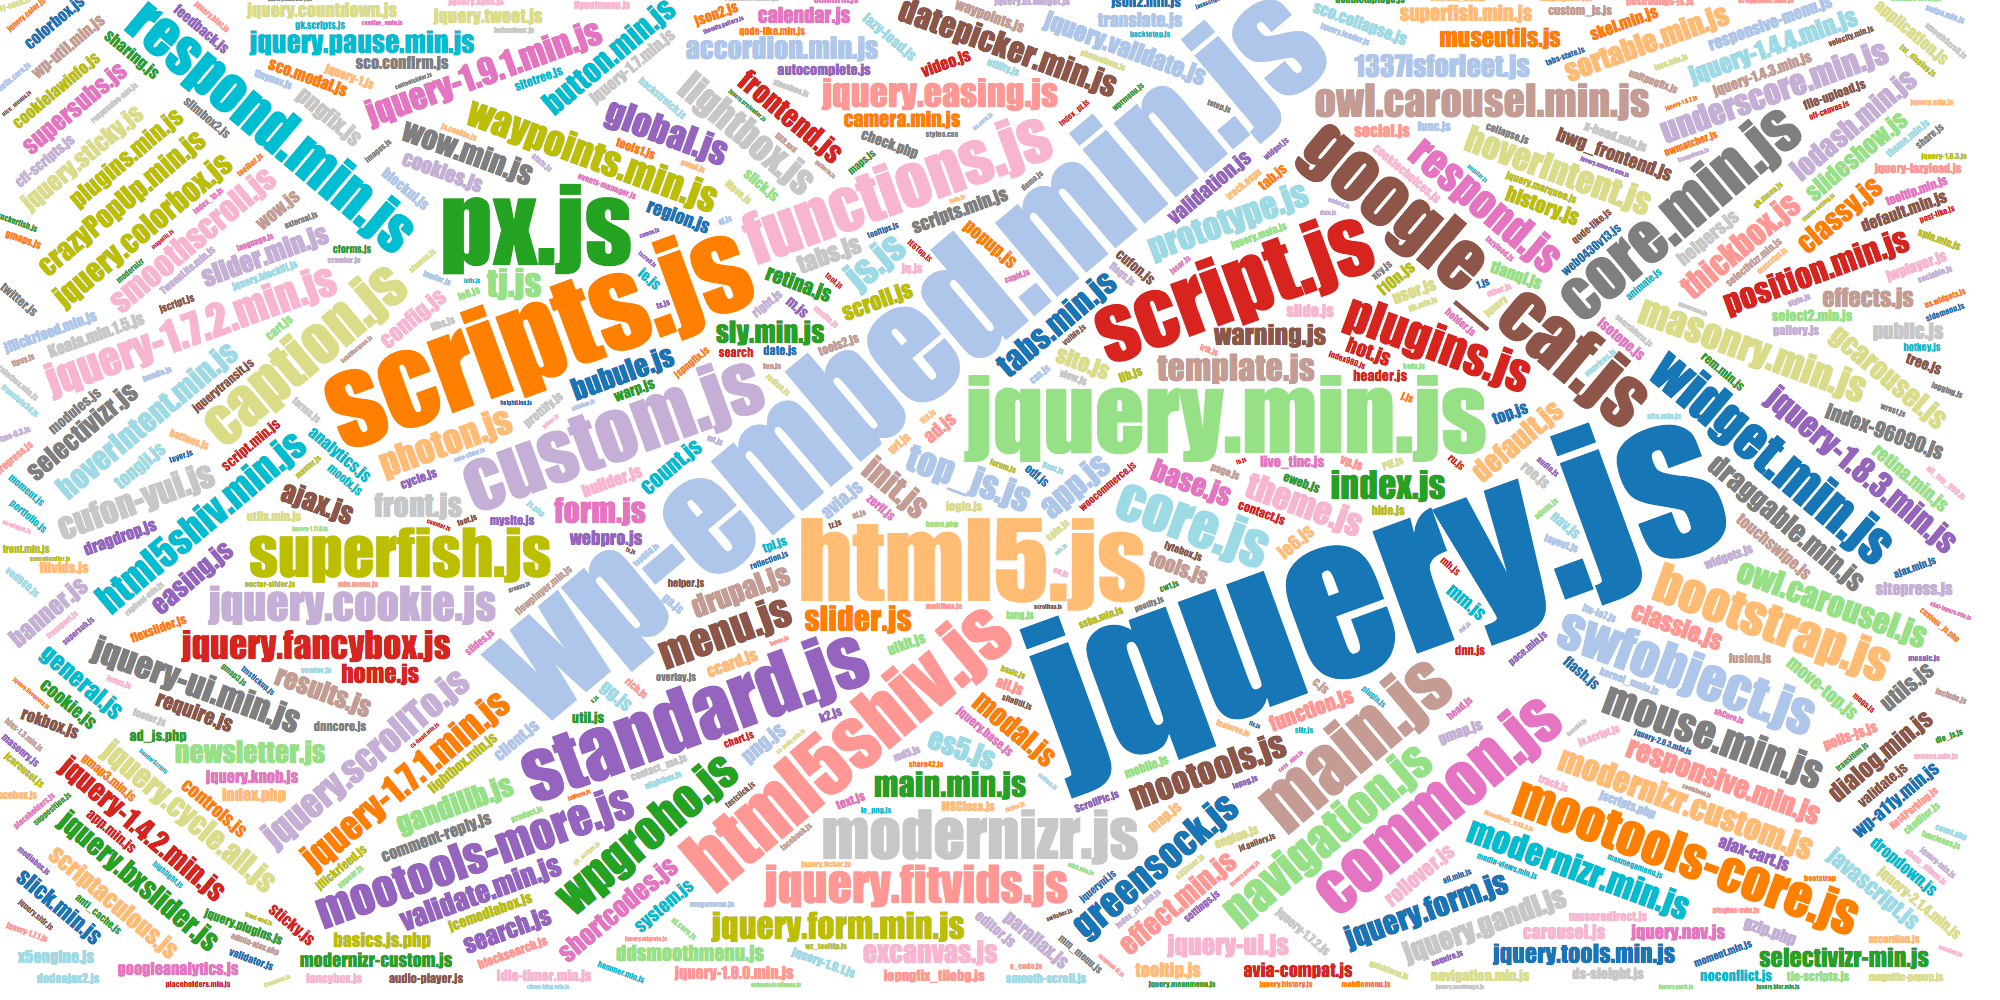 Popular names of JS files caf.js, common.js, etc.